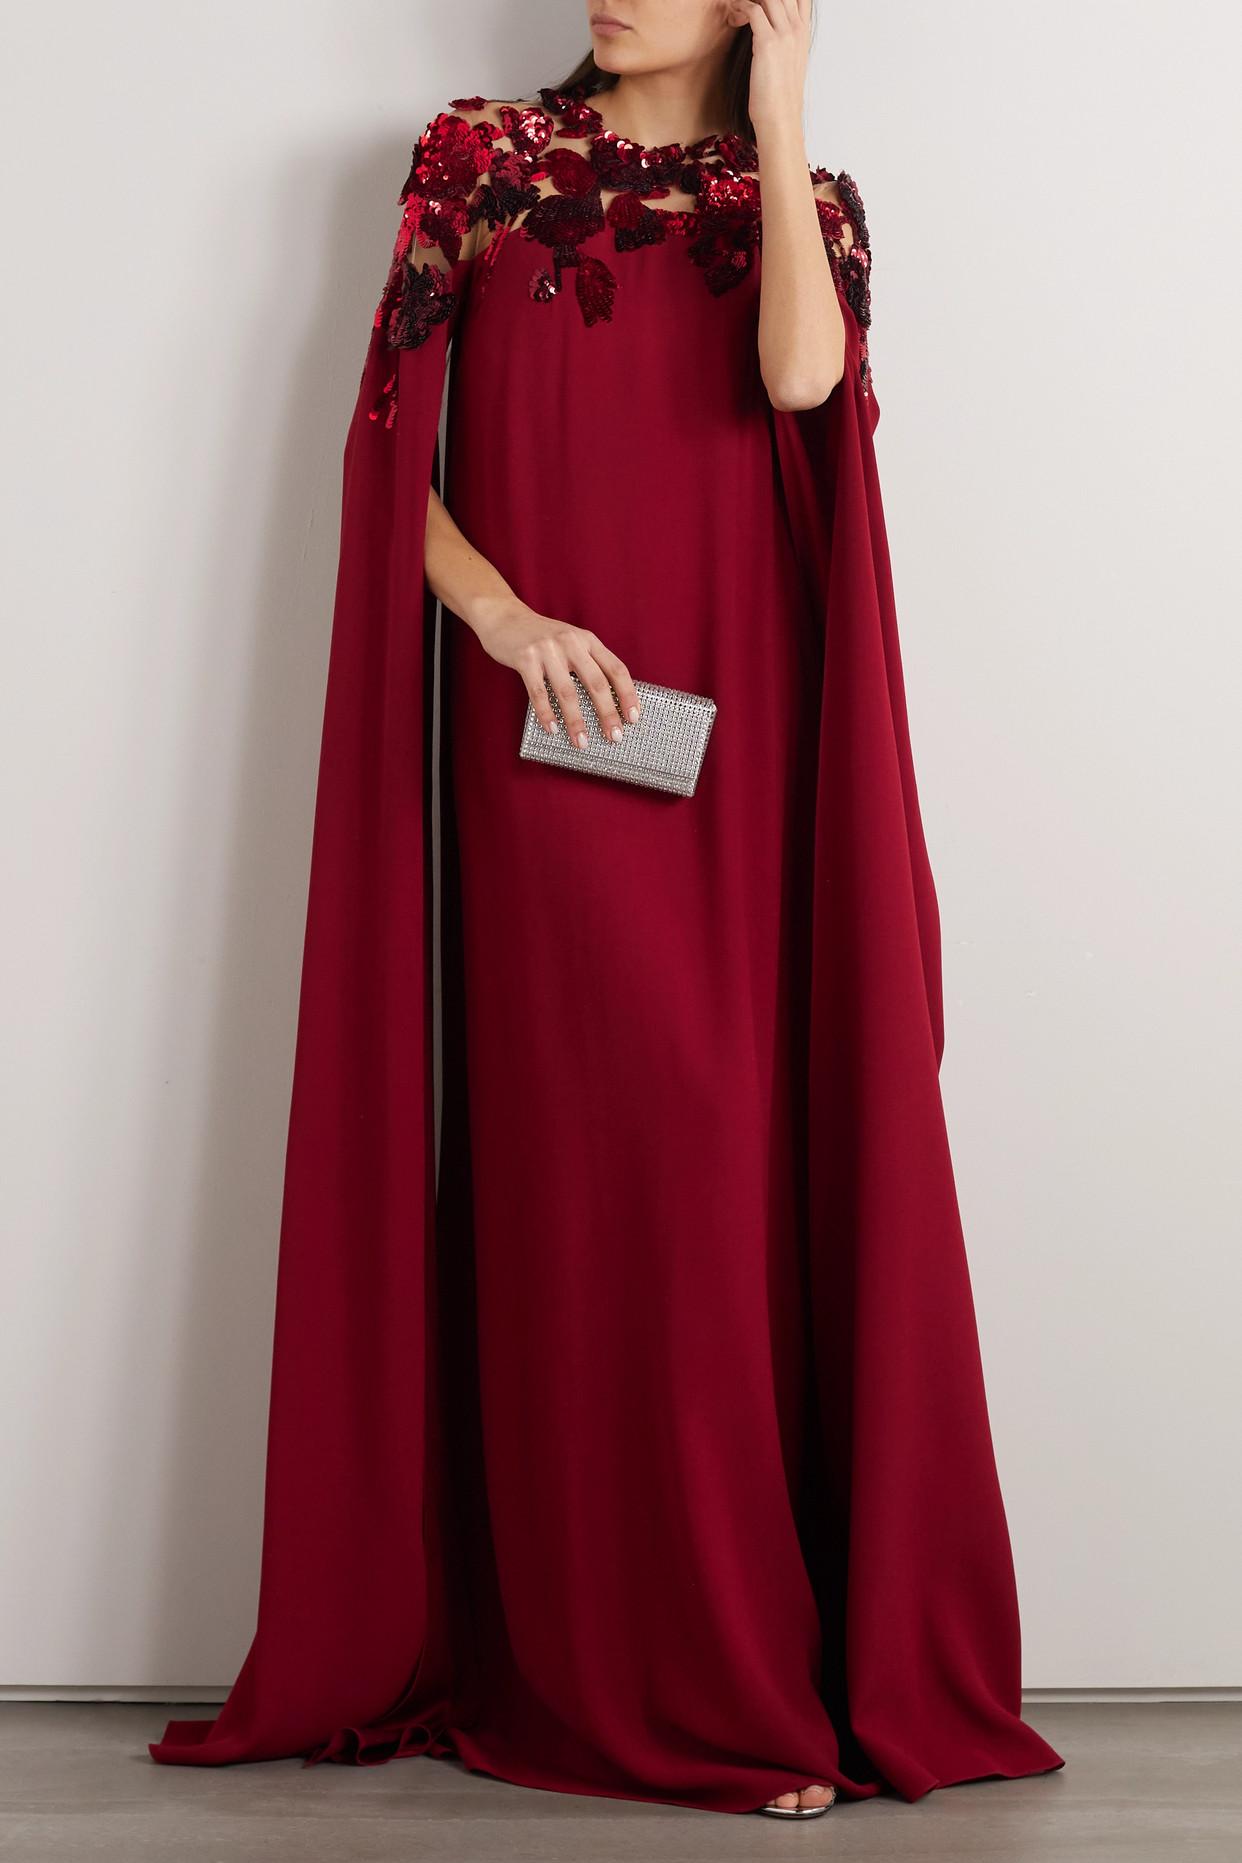 $475 Halston Women's Red Anne Stretch Crepe Gown Dress Size 12 | eBay